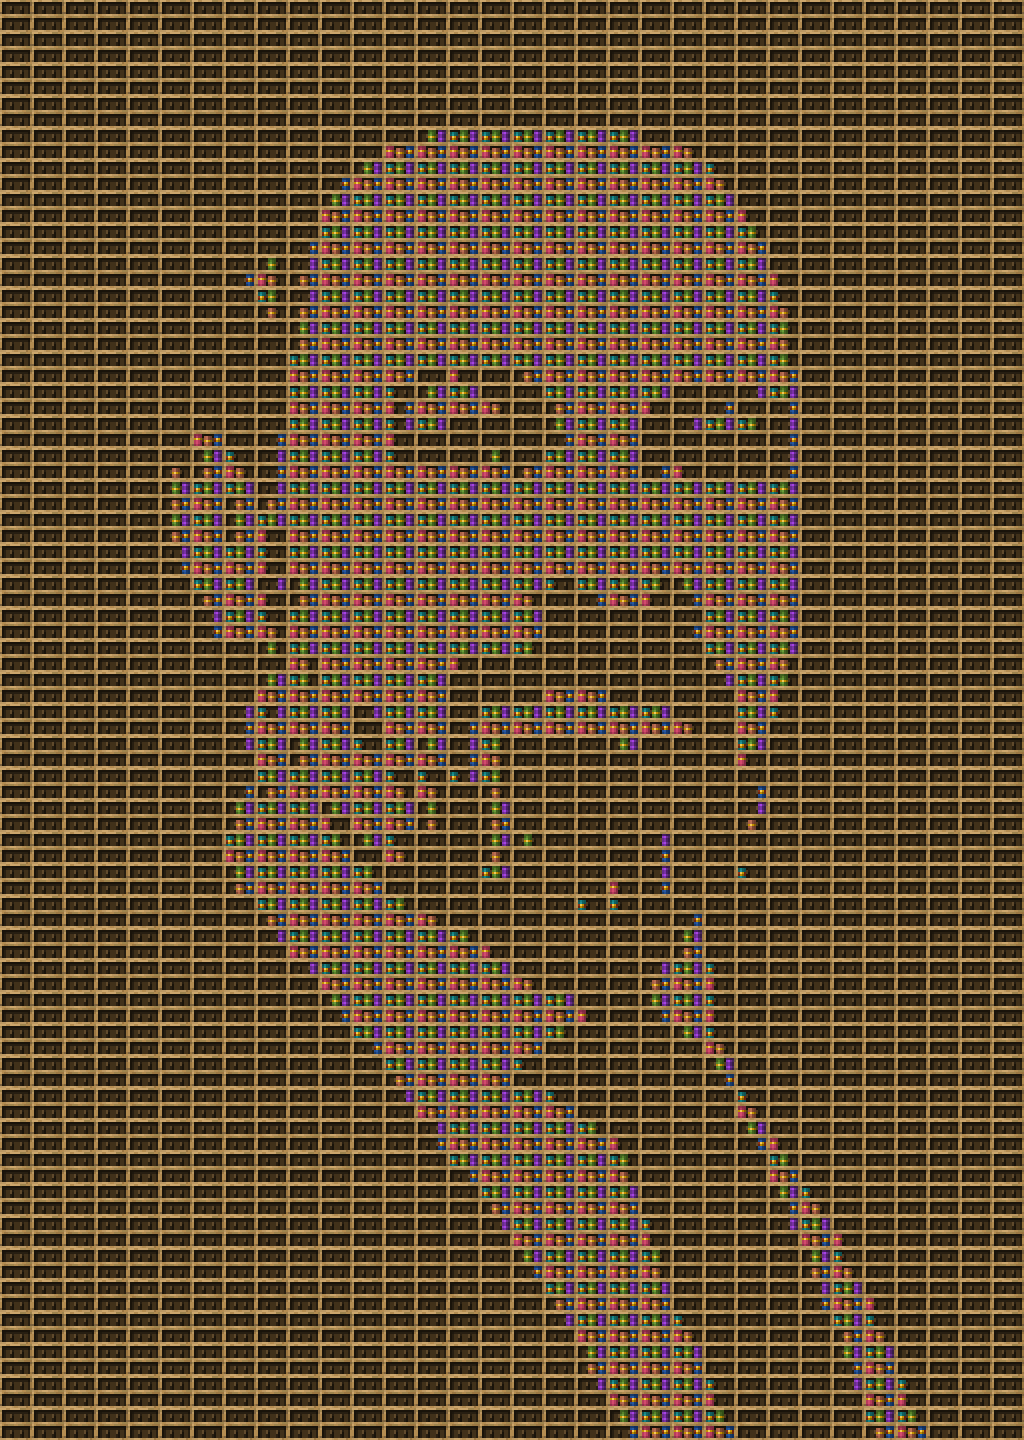 Abascal chiseled bookshelf pixel art.